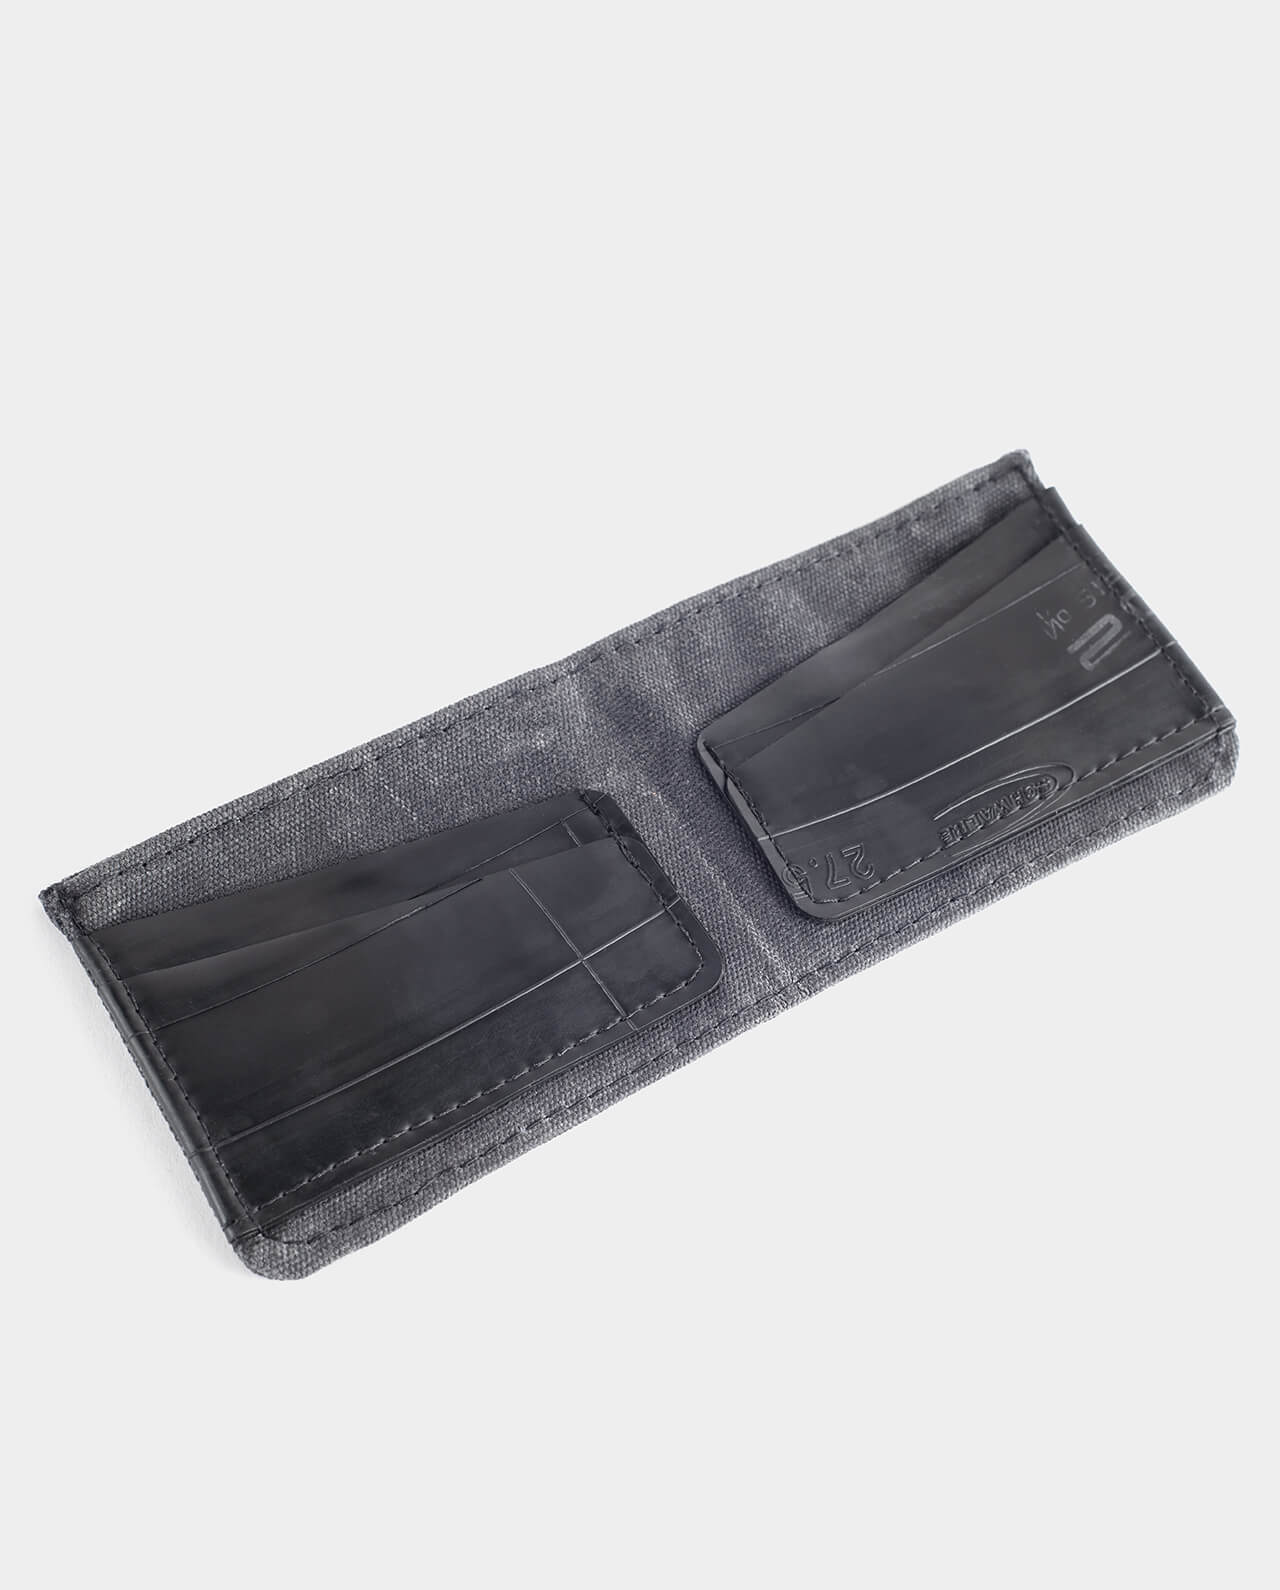 Leather-Trimmed Monogrammed Crystal Canvas Billfold Wallet